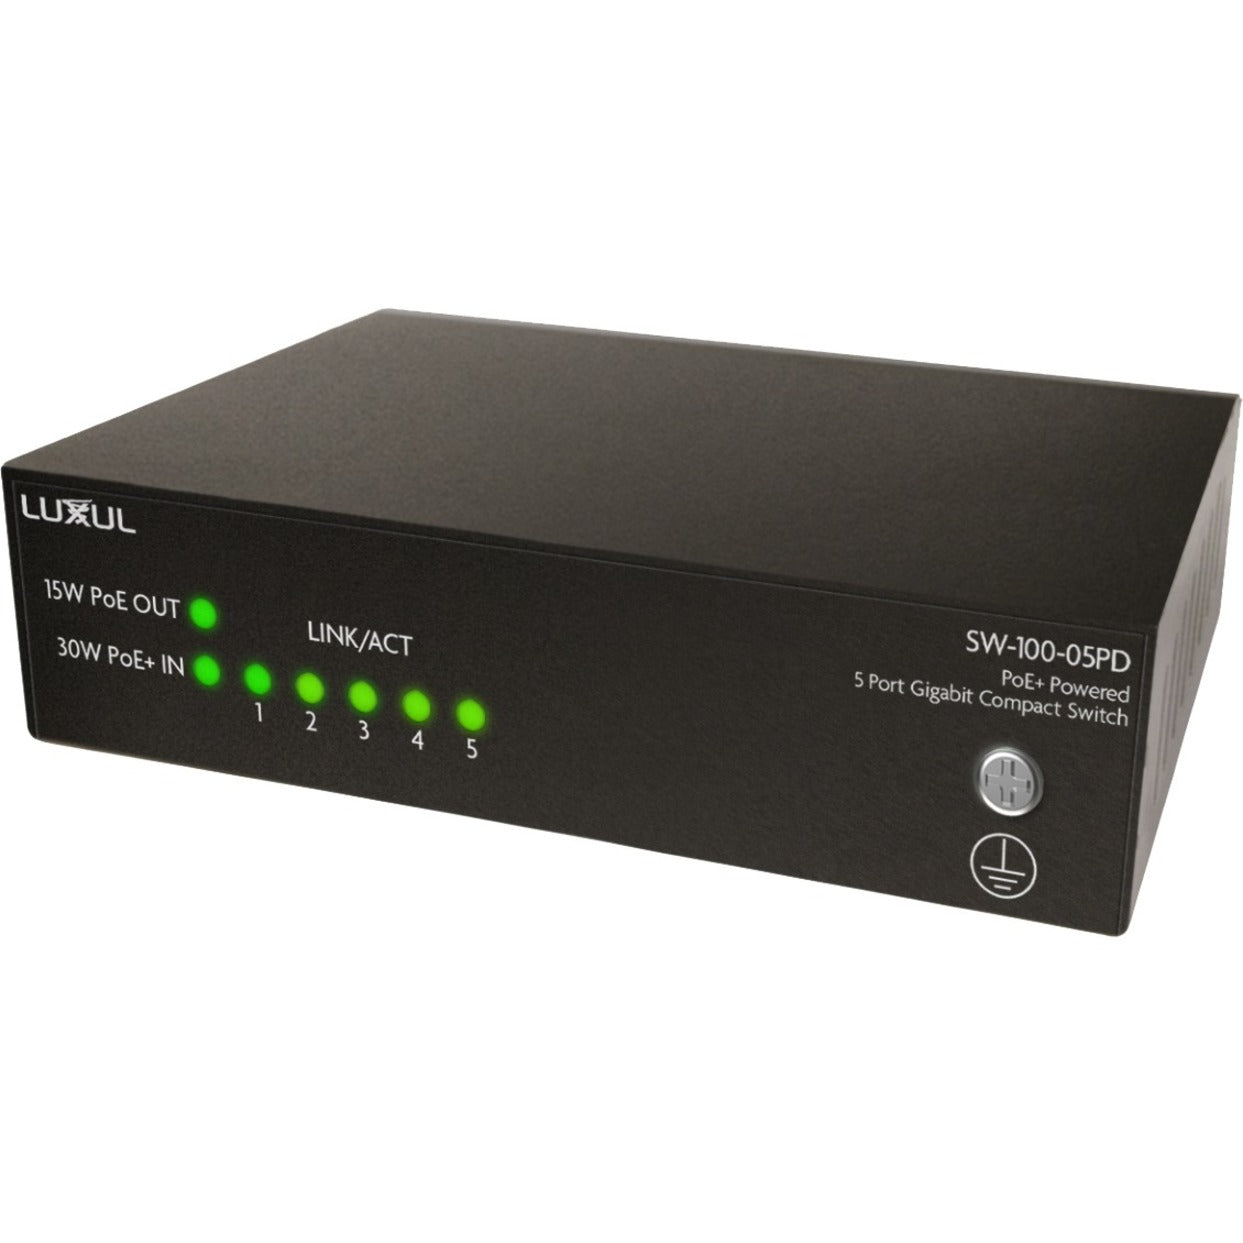 Luxul SW-100-05PD 5 Port Gb Multi-Mount Switch w/ PD Power, Gigabit Ethernet, PoE+ Support